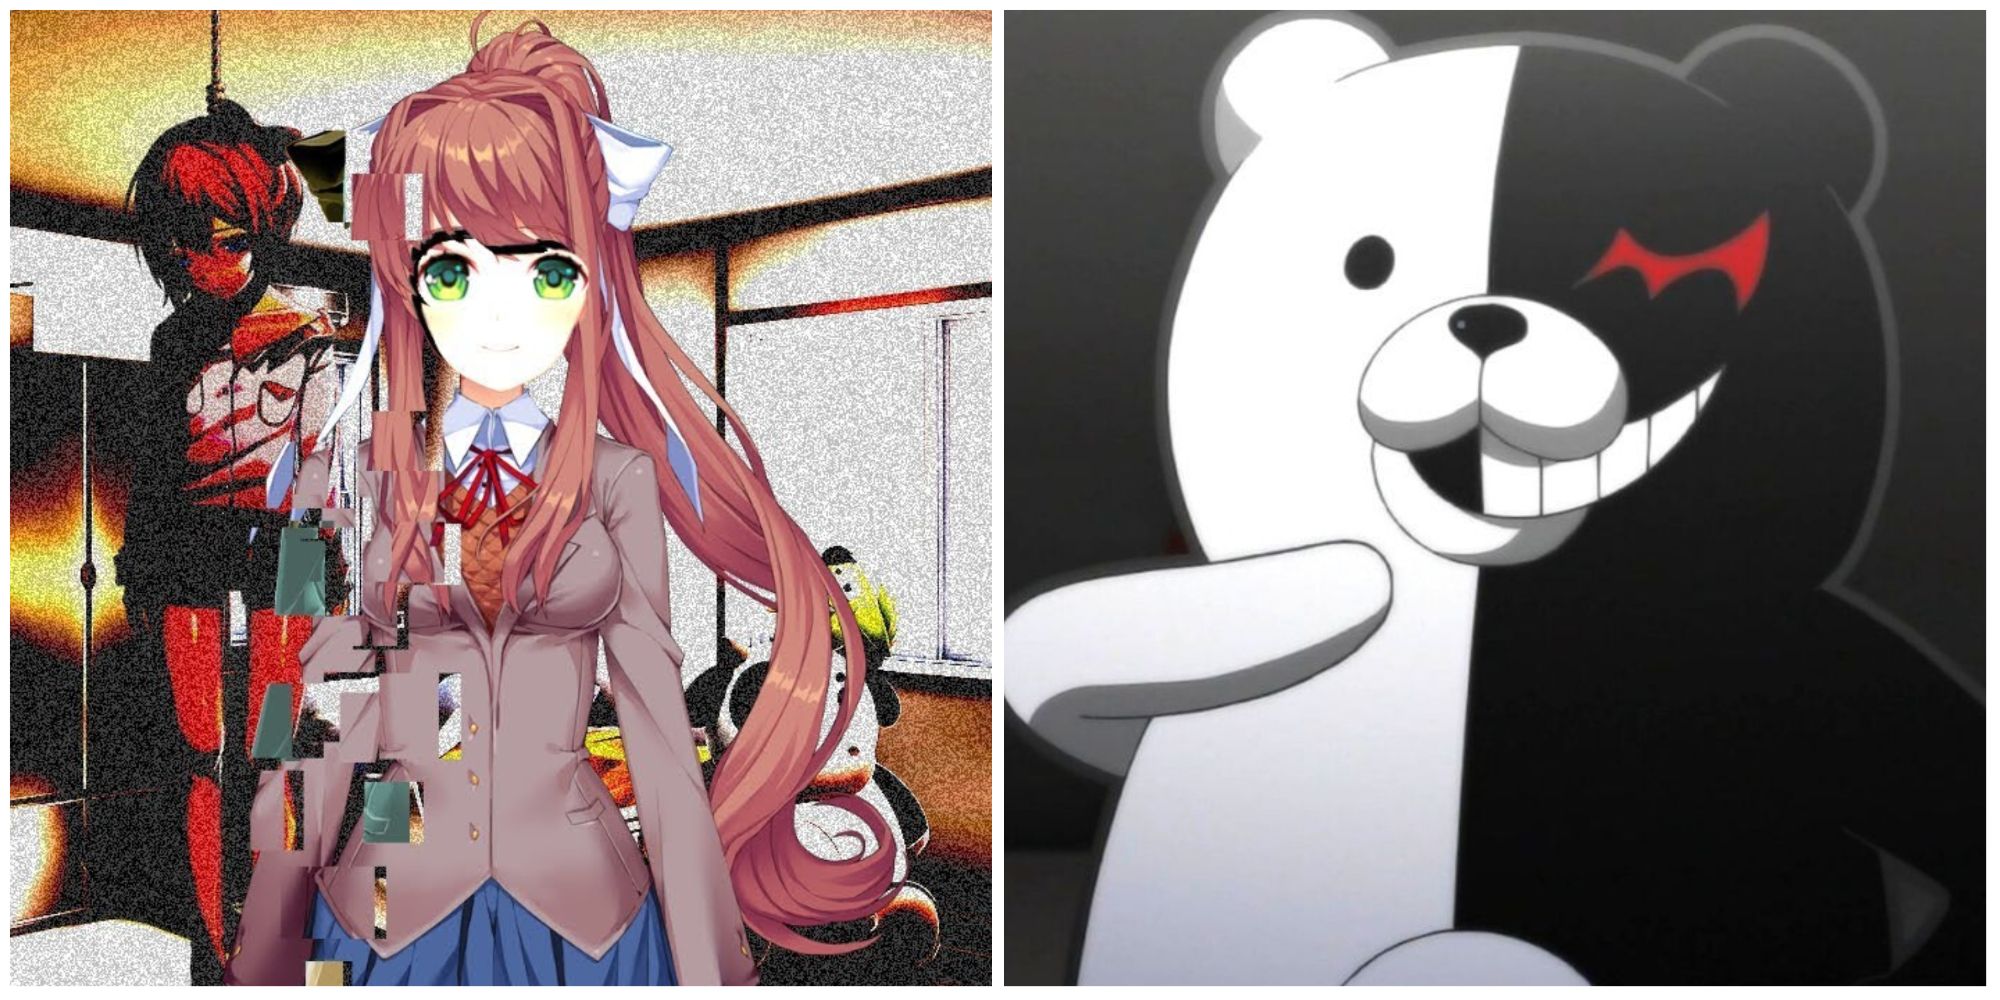 left: Monika in Doki Doki; right: Monokuma